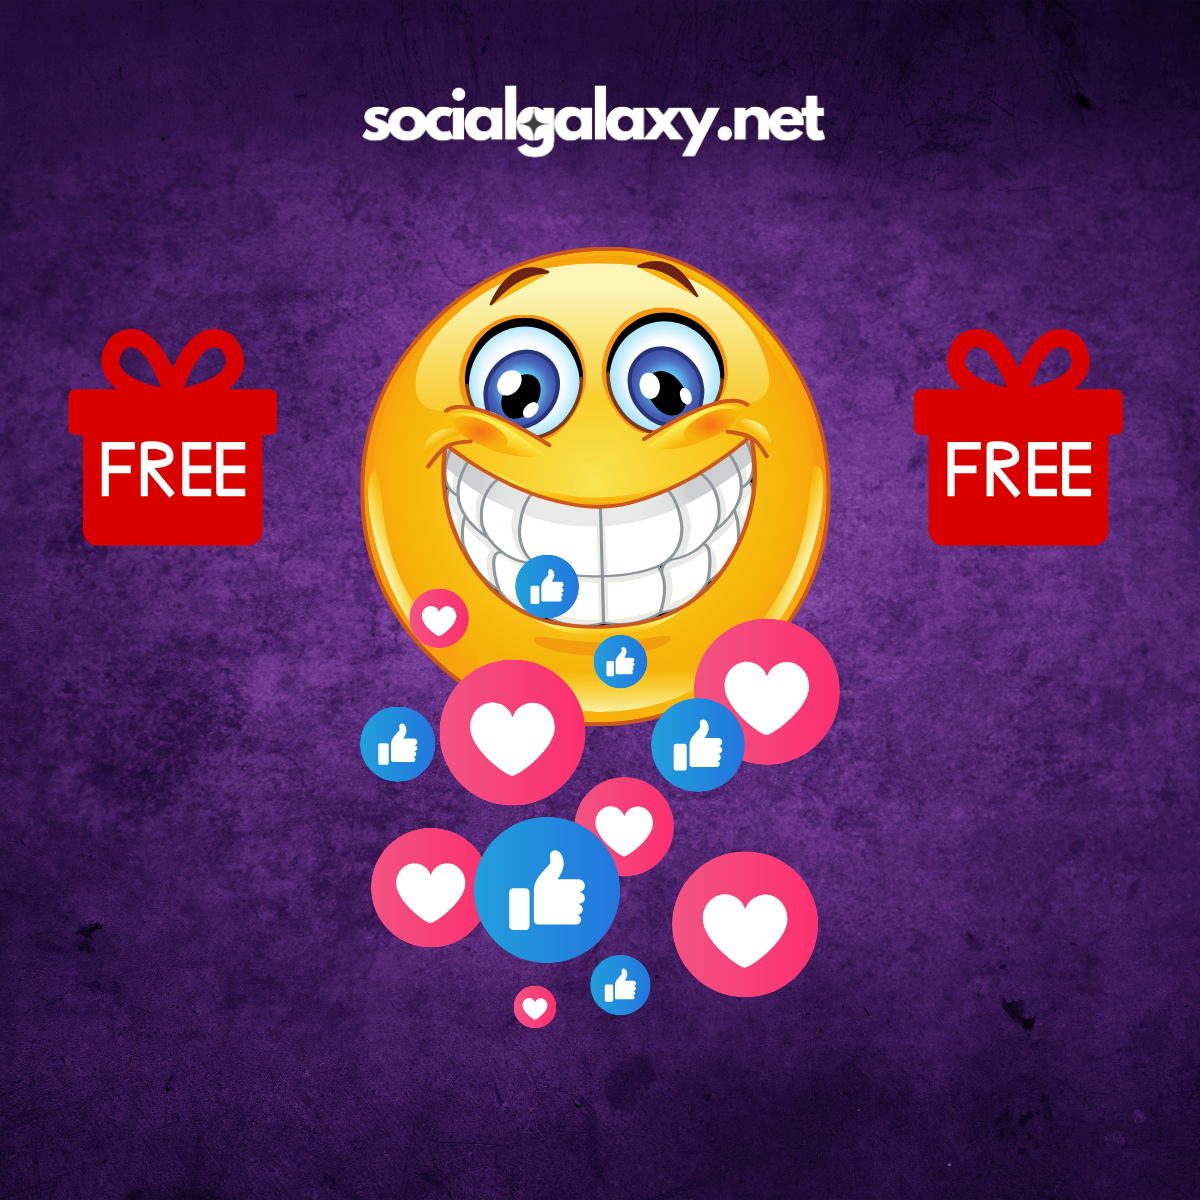 Get Real, Free IG Followers with SocialGalaxy.net